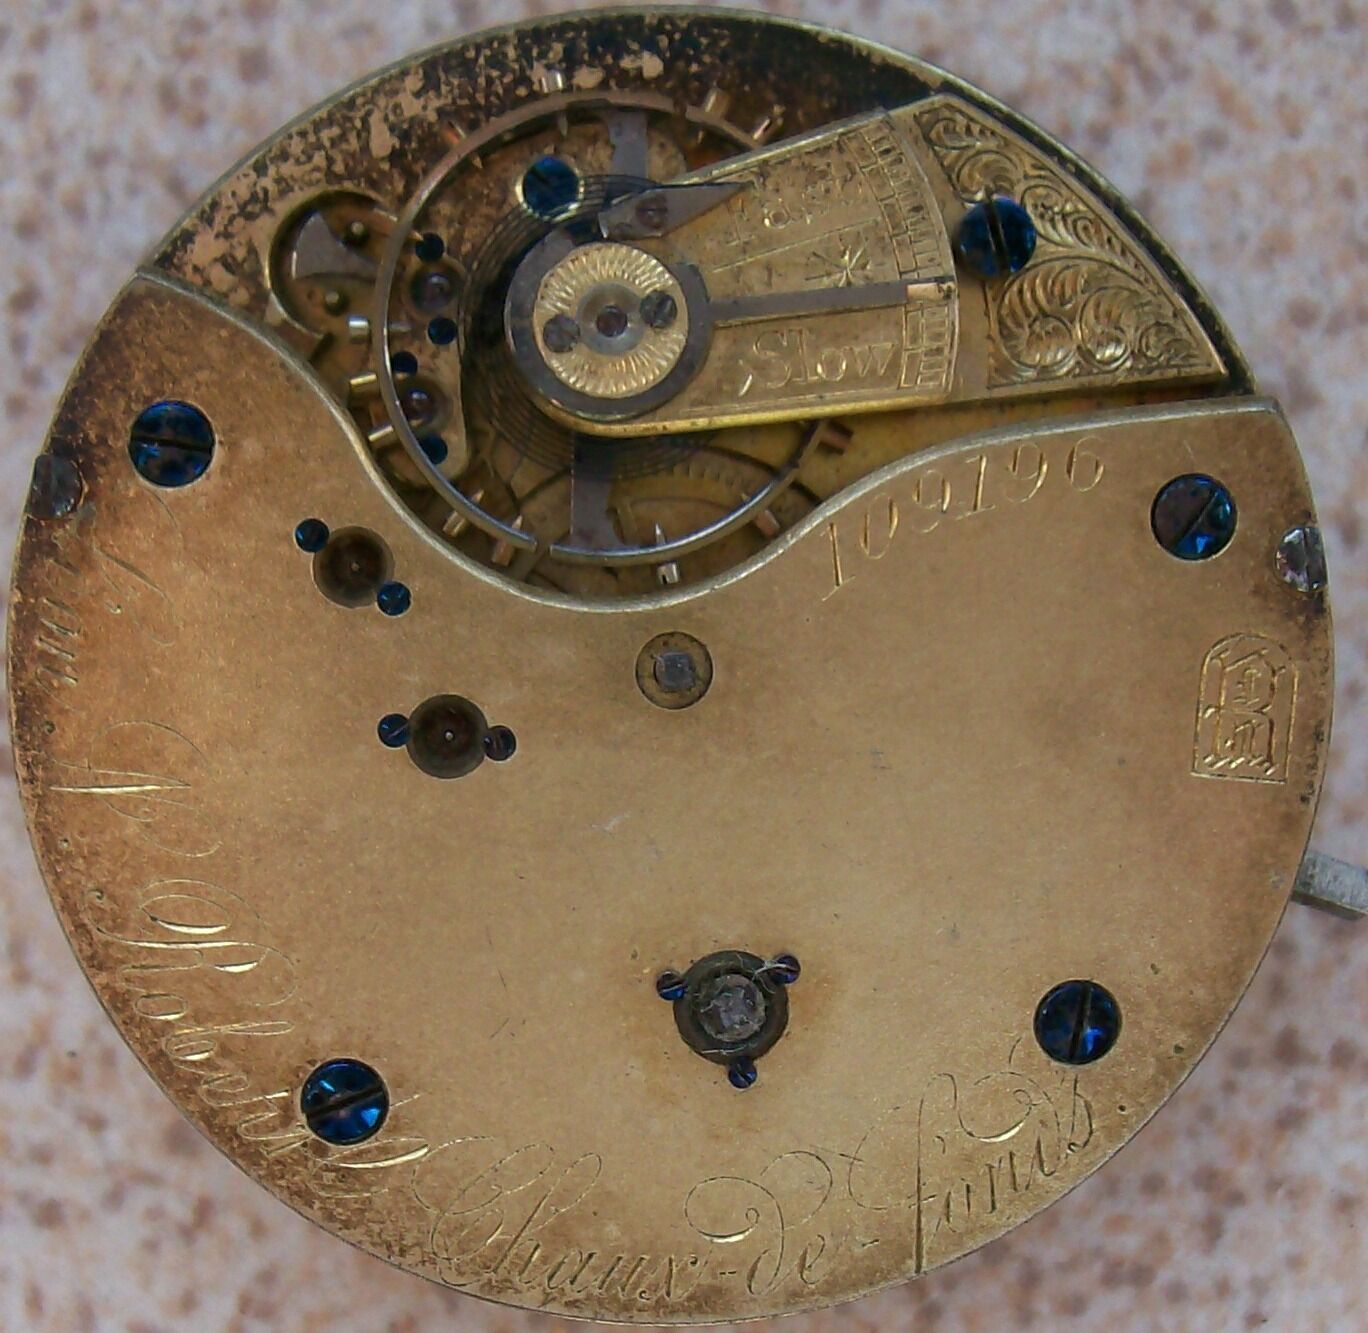 Leon N. Robert Pocket watch movement 45,5 mm. in diameter balance Ok.